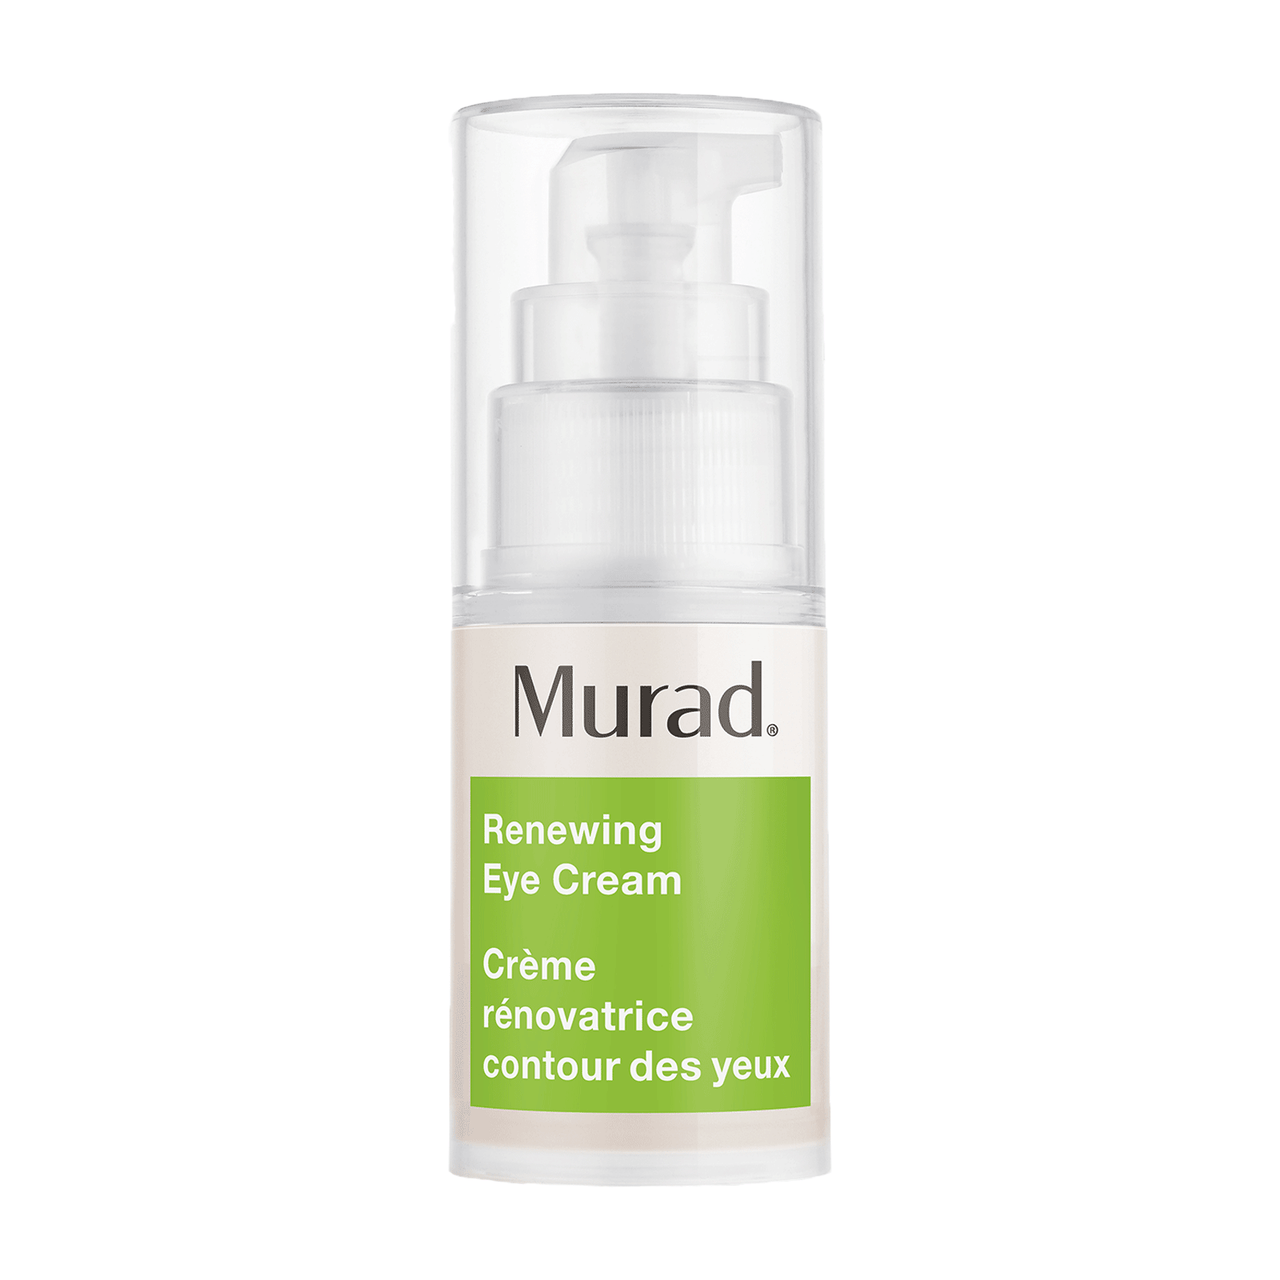 Murad Renewing Eye Cream .5 fl. oz.